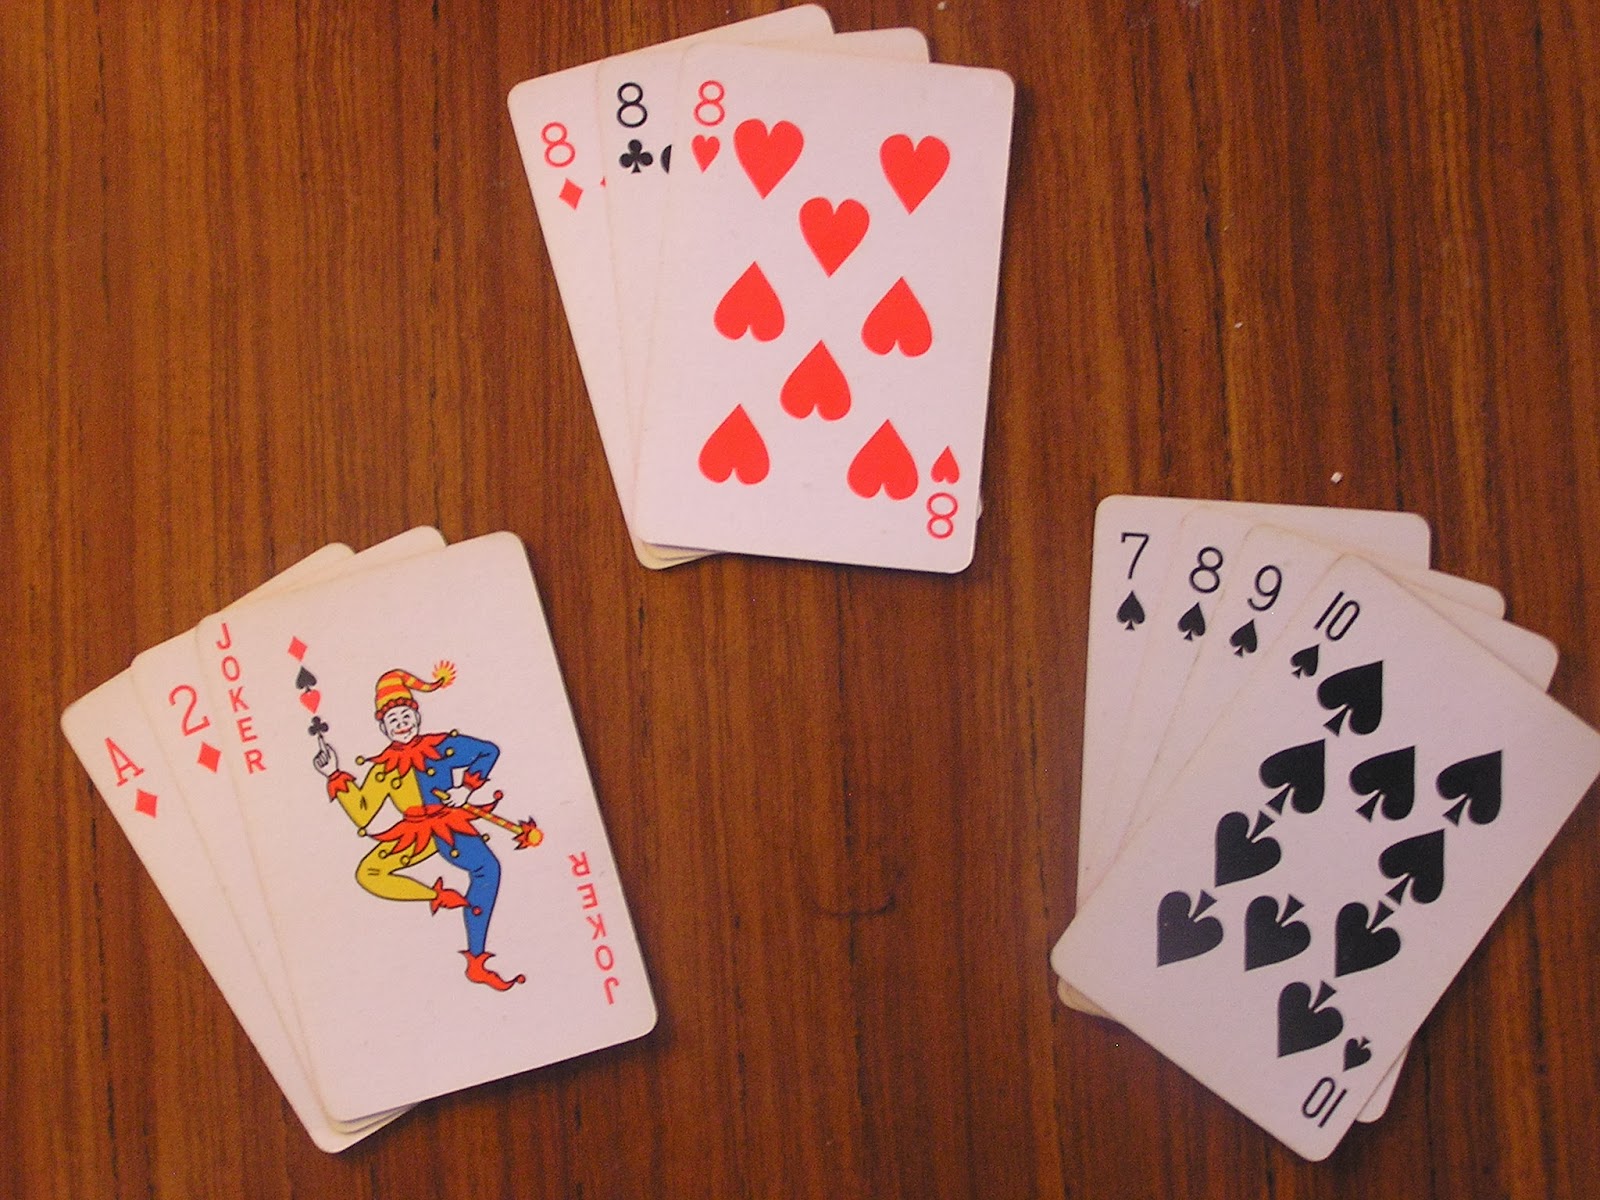 Kaartspellen: Basis 2-7 spelers - Spelregels